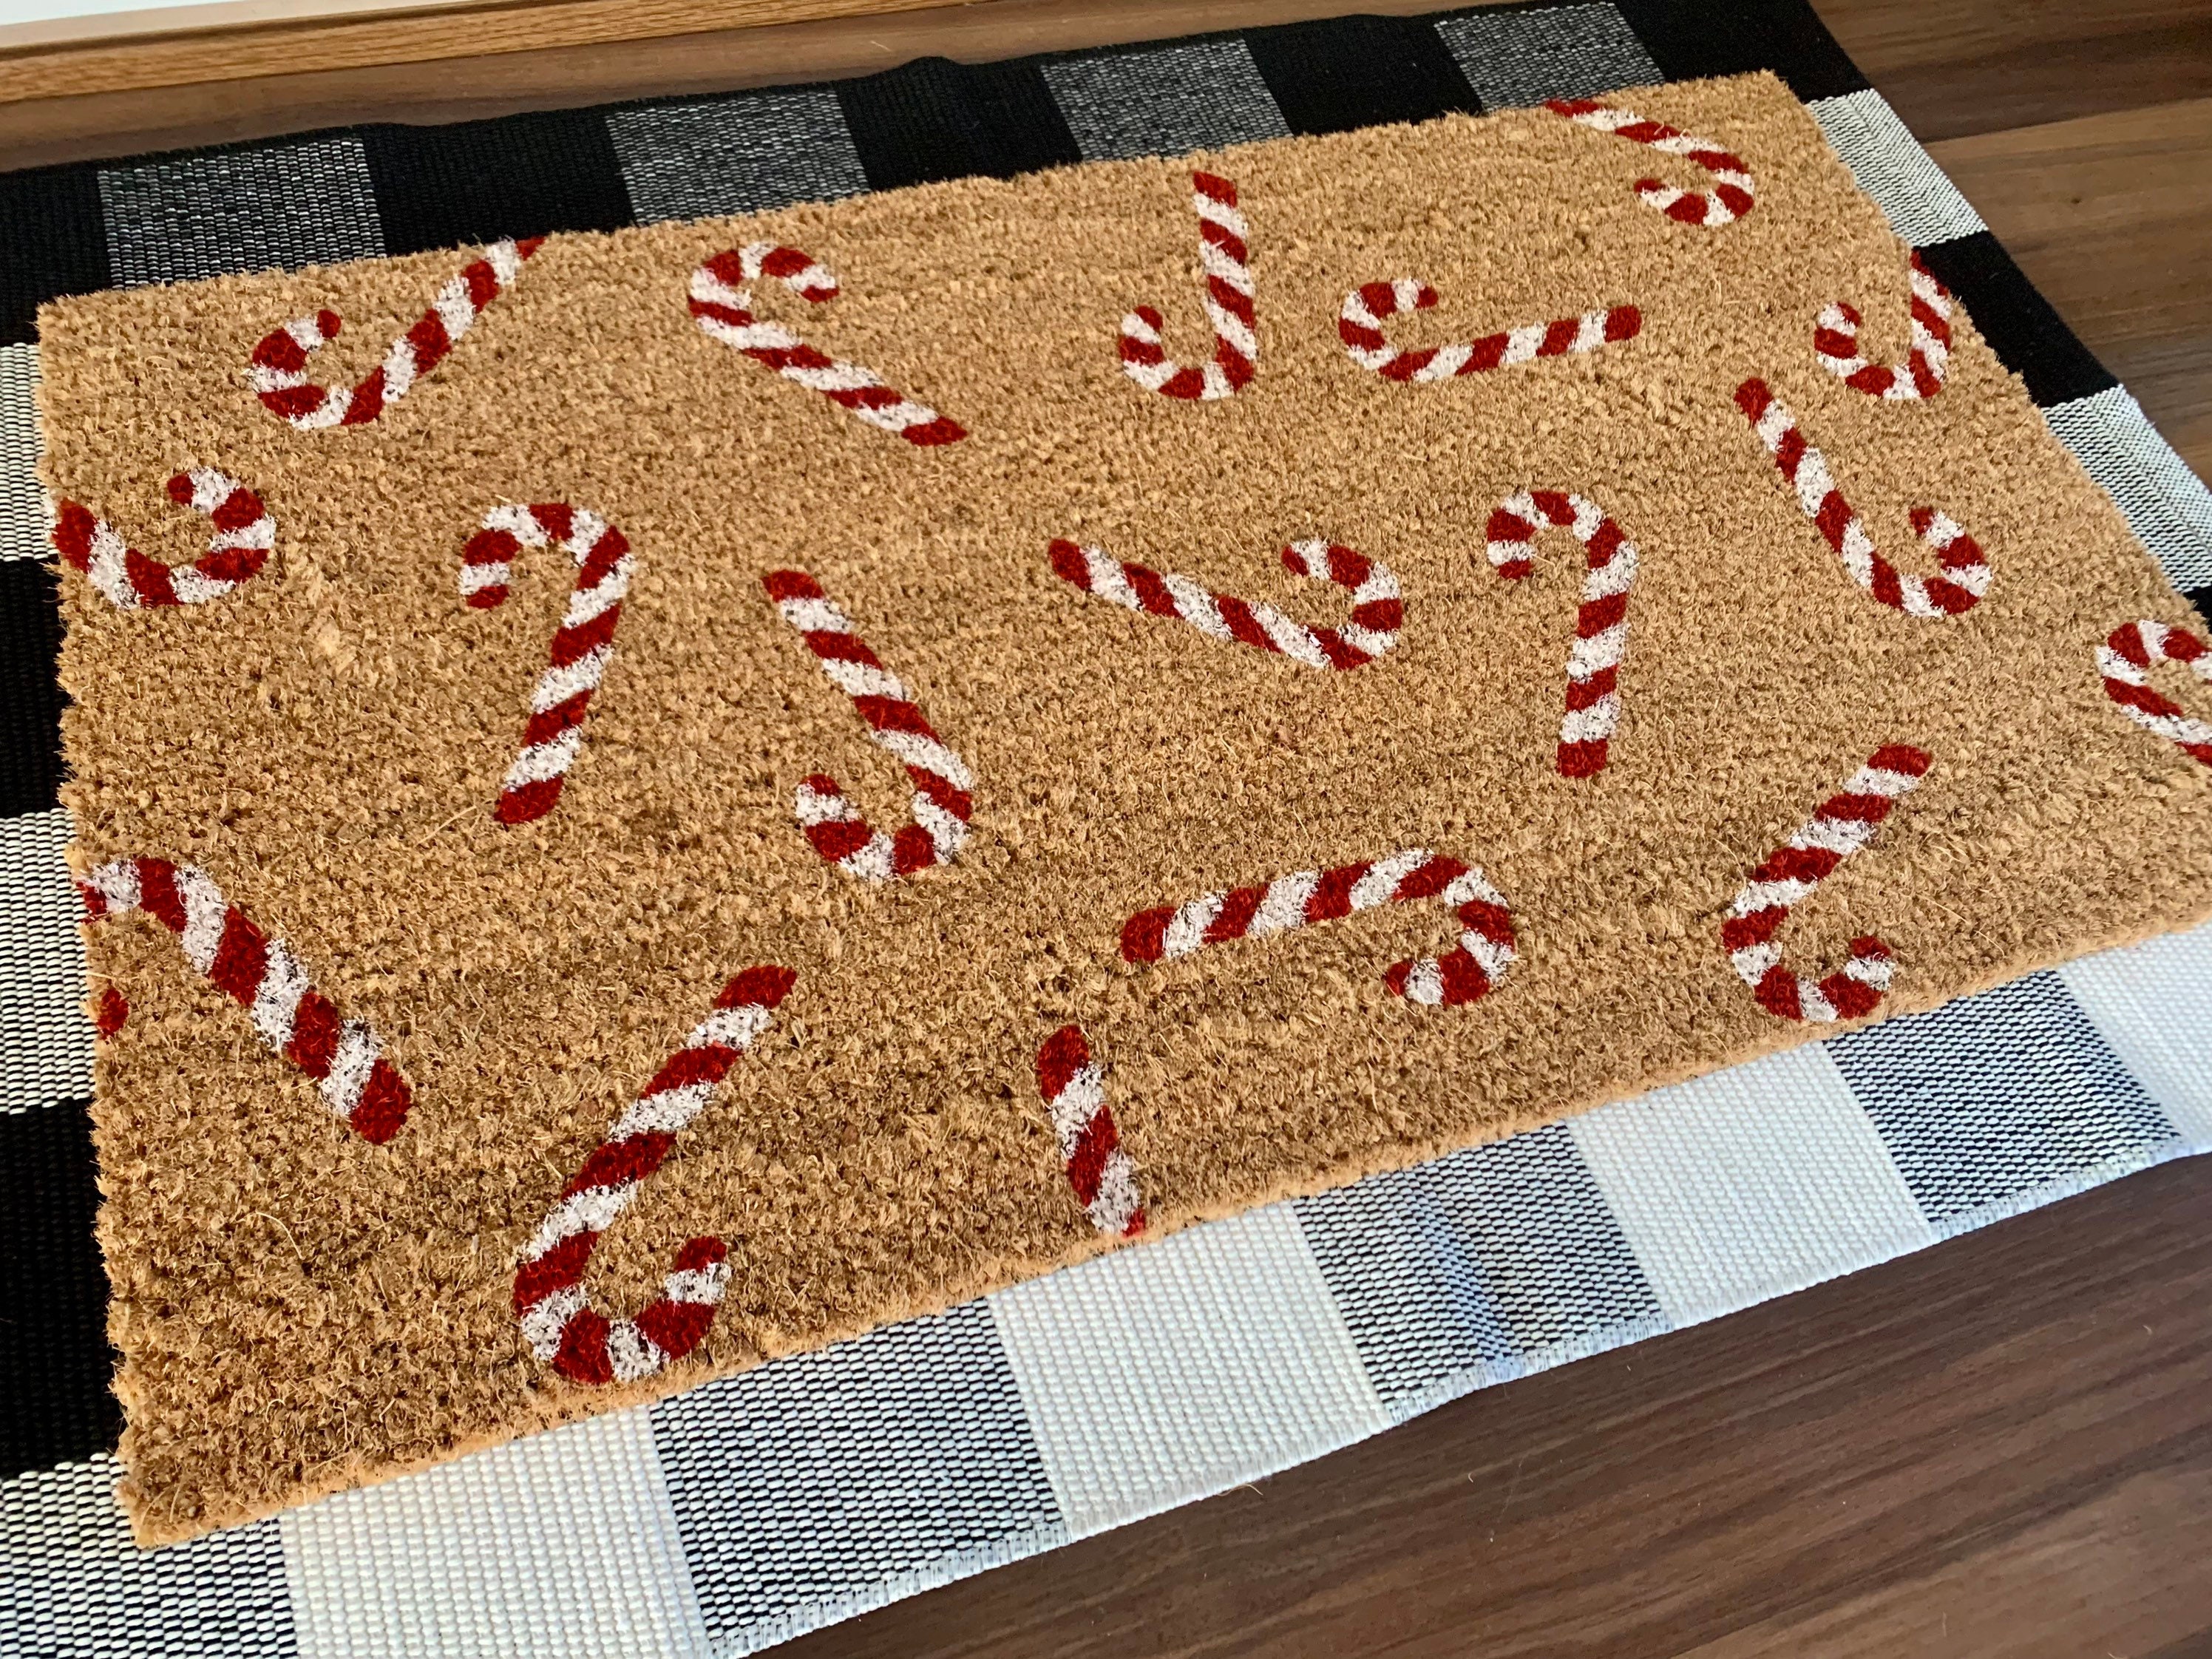 Make a Cute DIY Doormat in Three Easy Steps! - DIY Candy